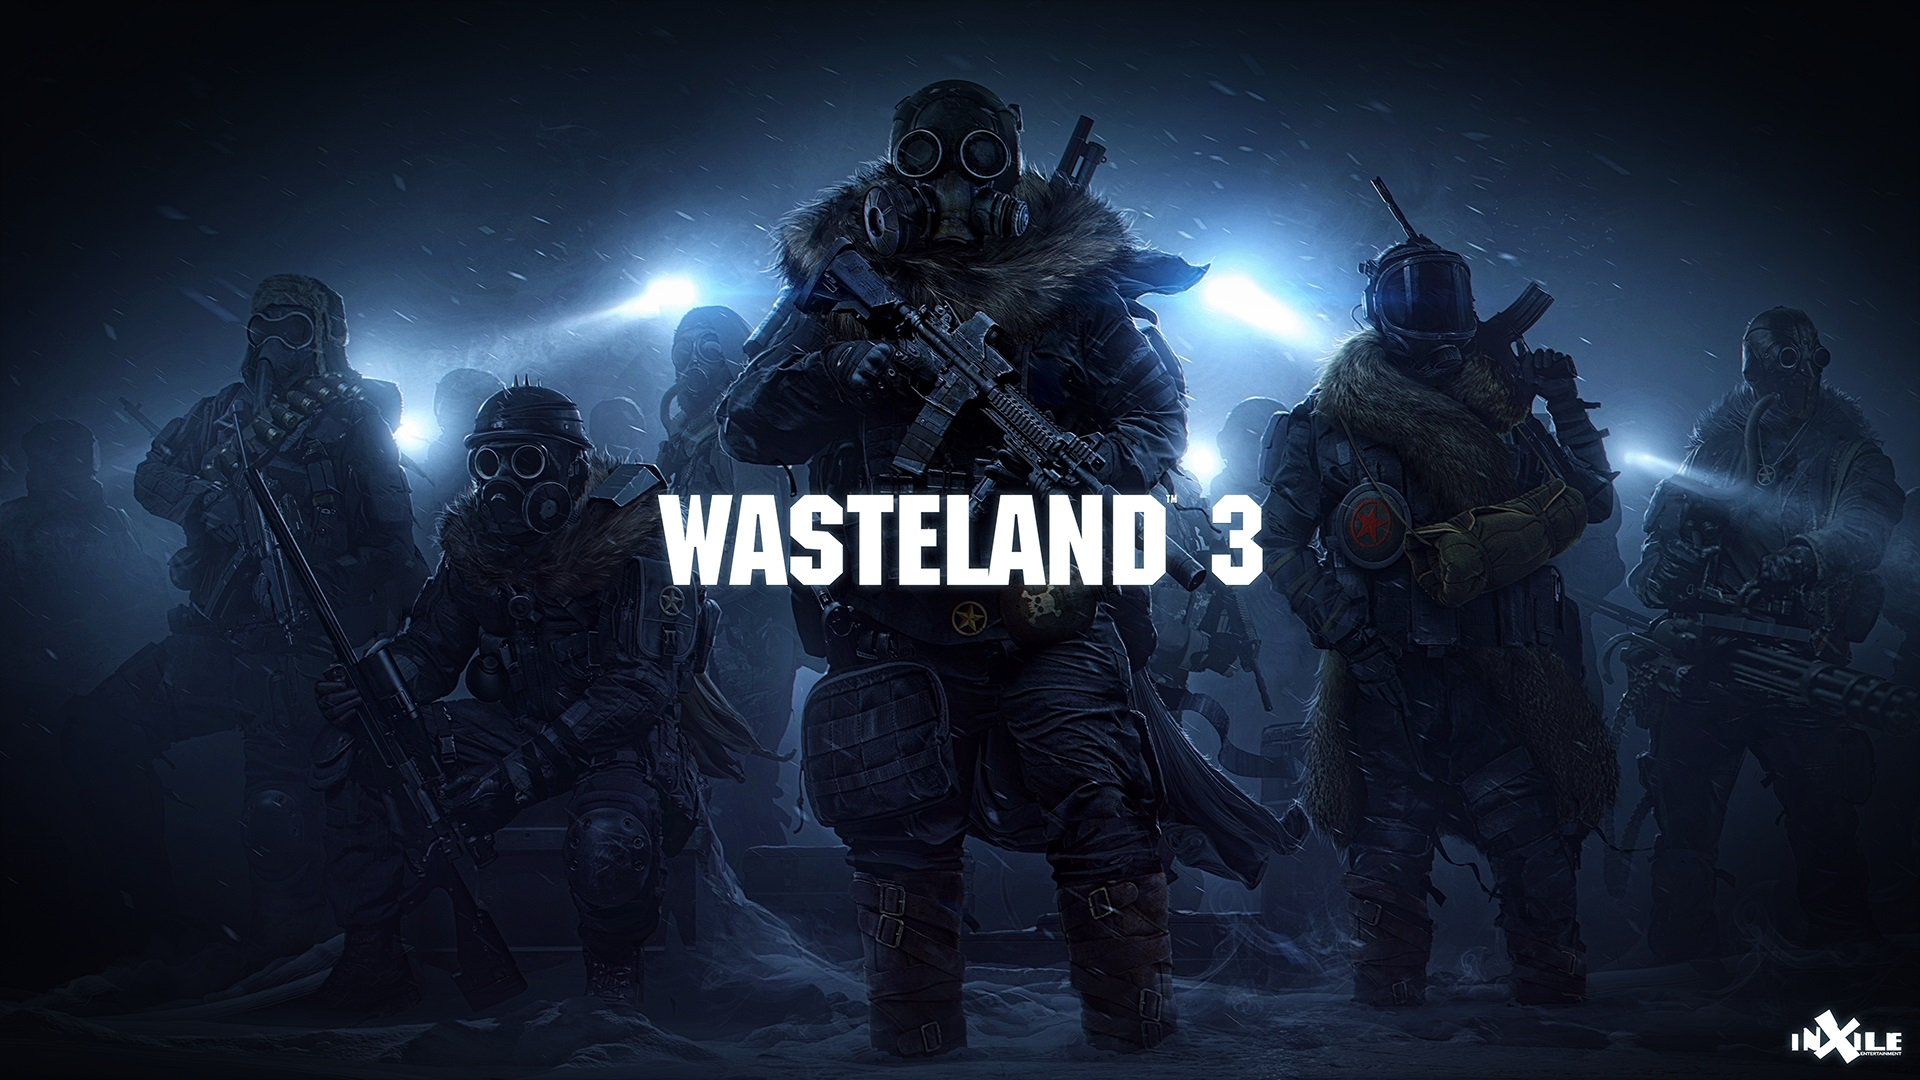 Обложка игры Wasteland 3